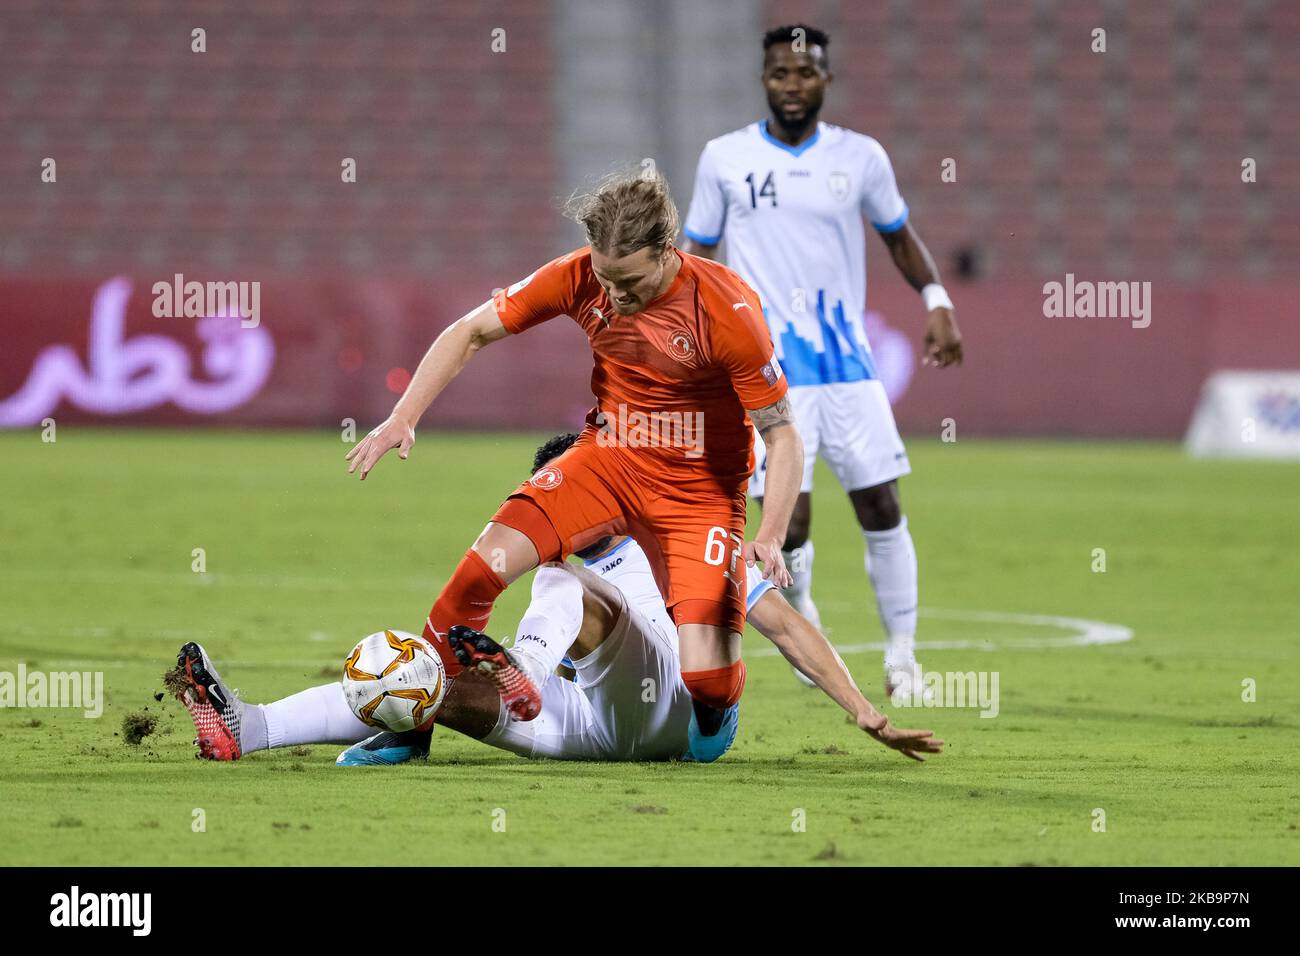 Al Arabi's Birkir Bjarnason is tackled during the QNB Stars League match against Al Wakrah on 1 November 2019 at the Grand Hamad Stadium in Doha, Qatar. (Photo by Simon Holmes/NurPhoto) Stock Photo